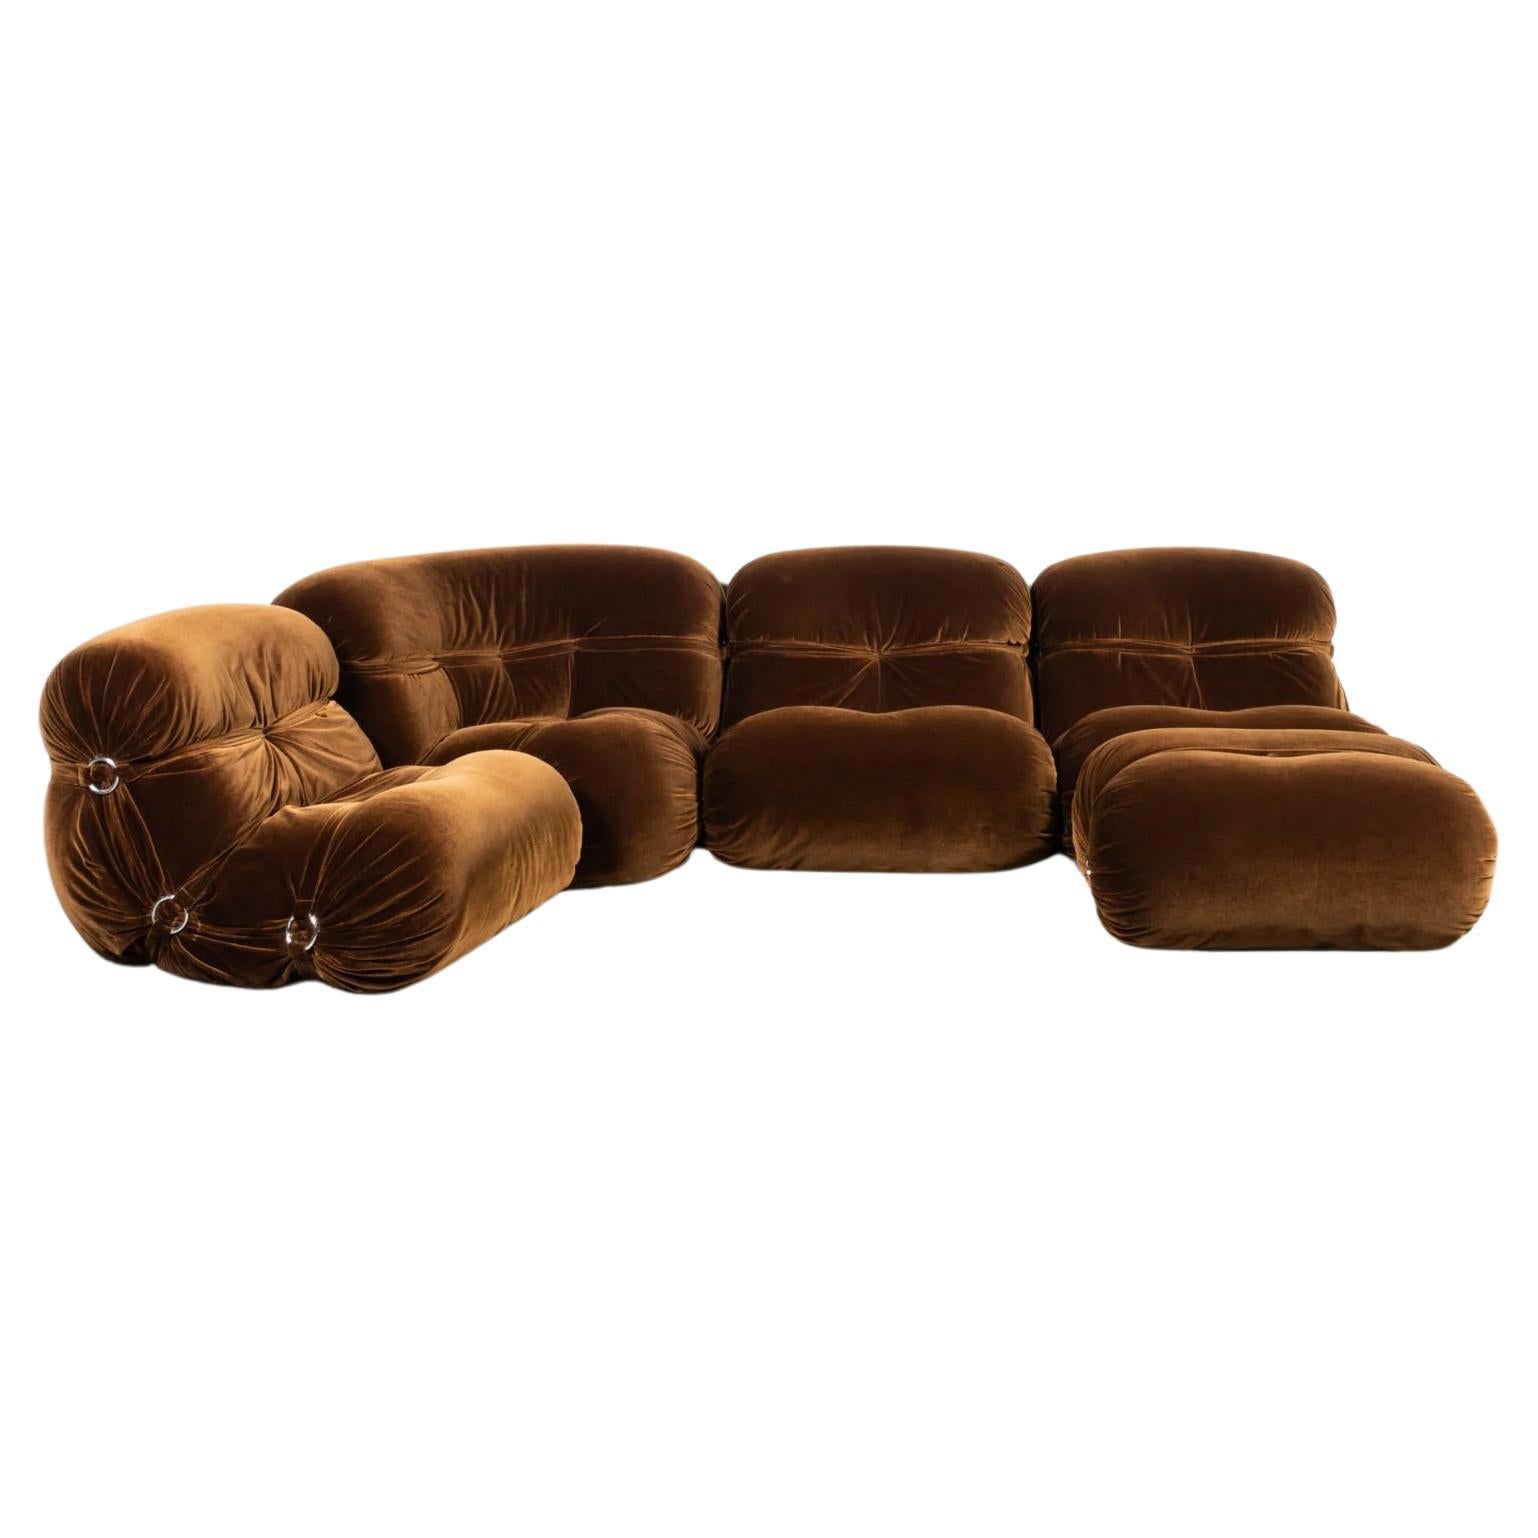 1970 5 piece Modular Sofa in Original Chocolate Brown Velvet